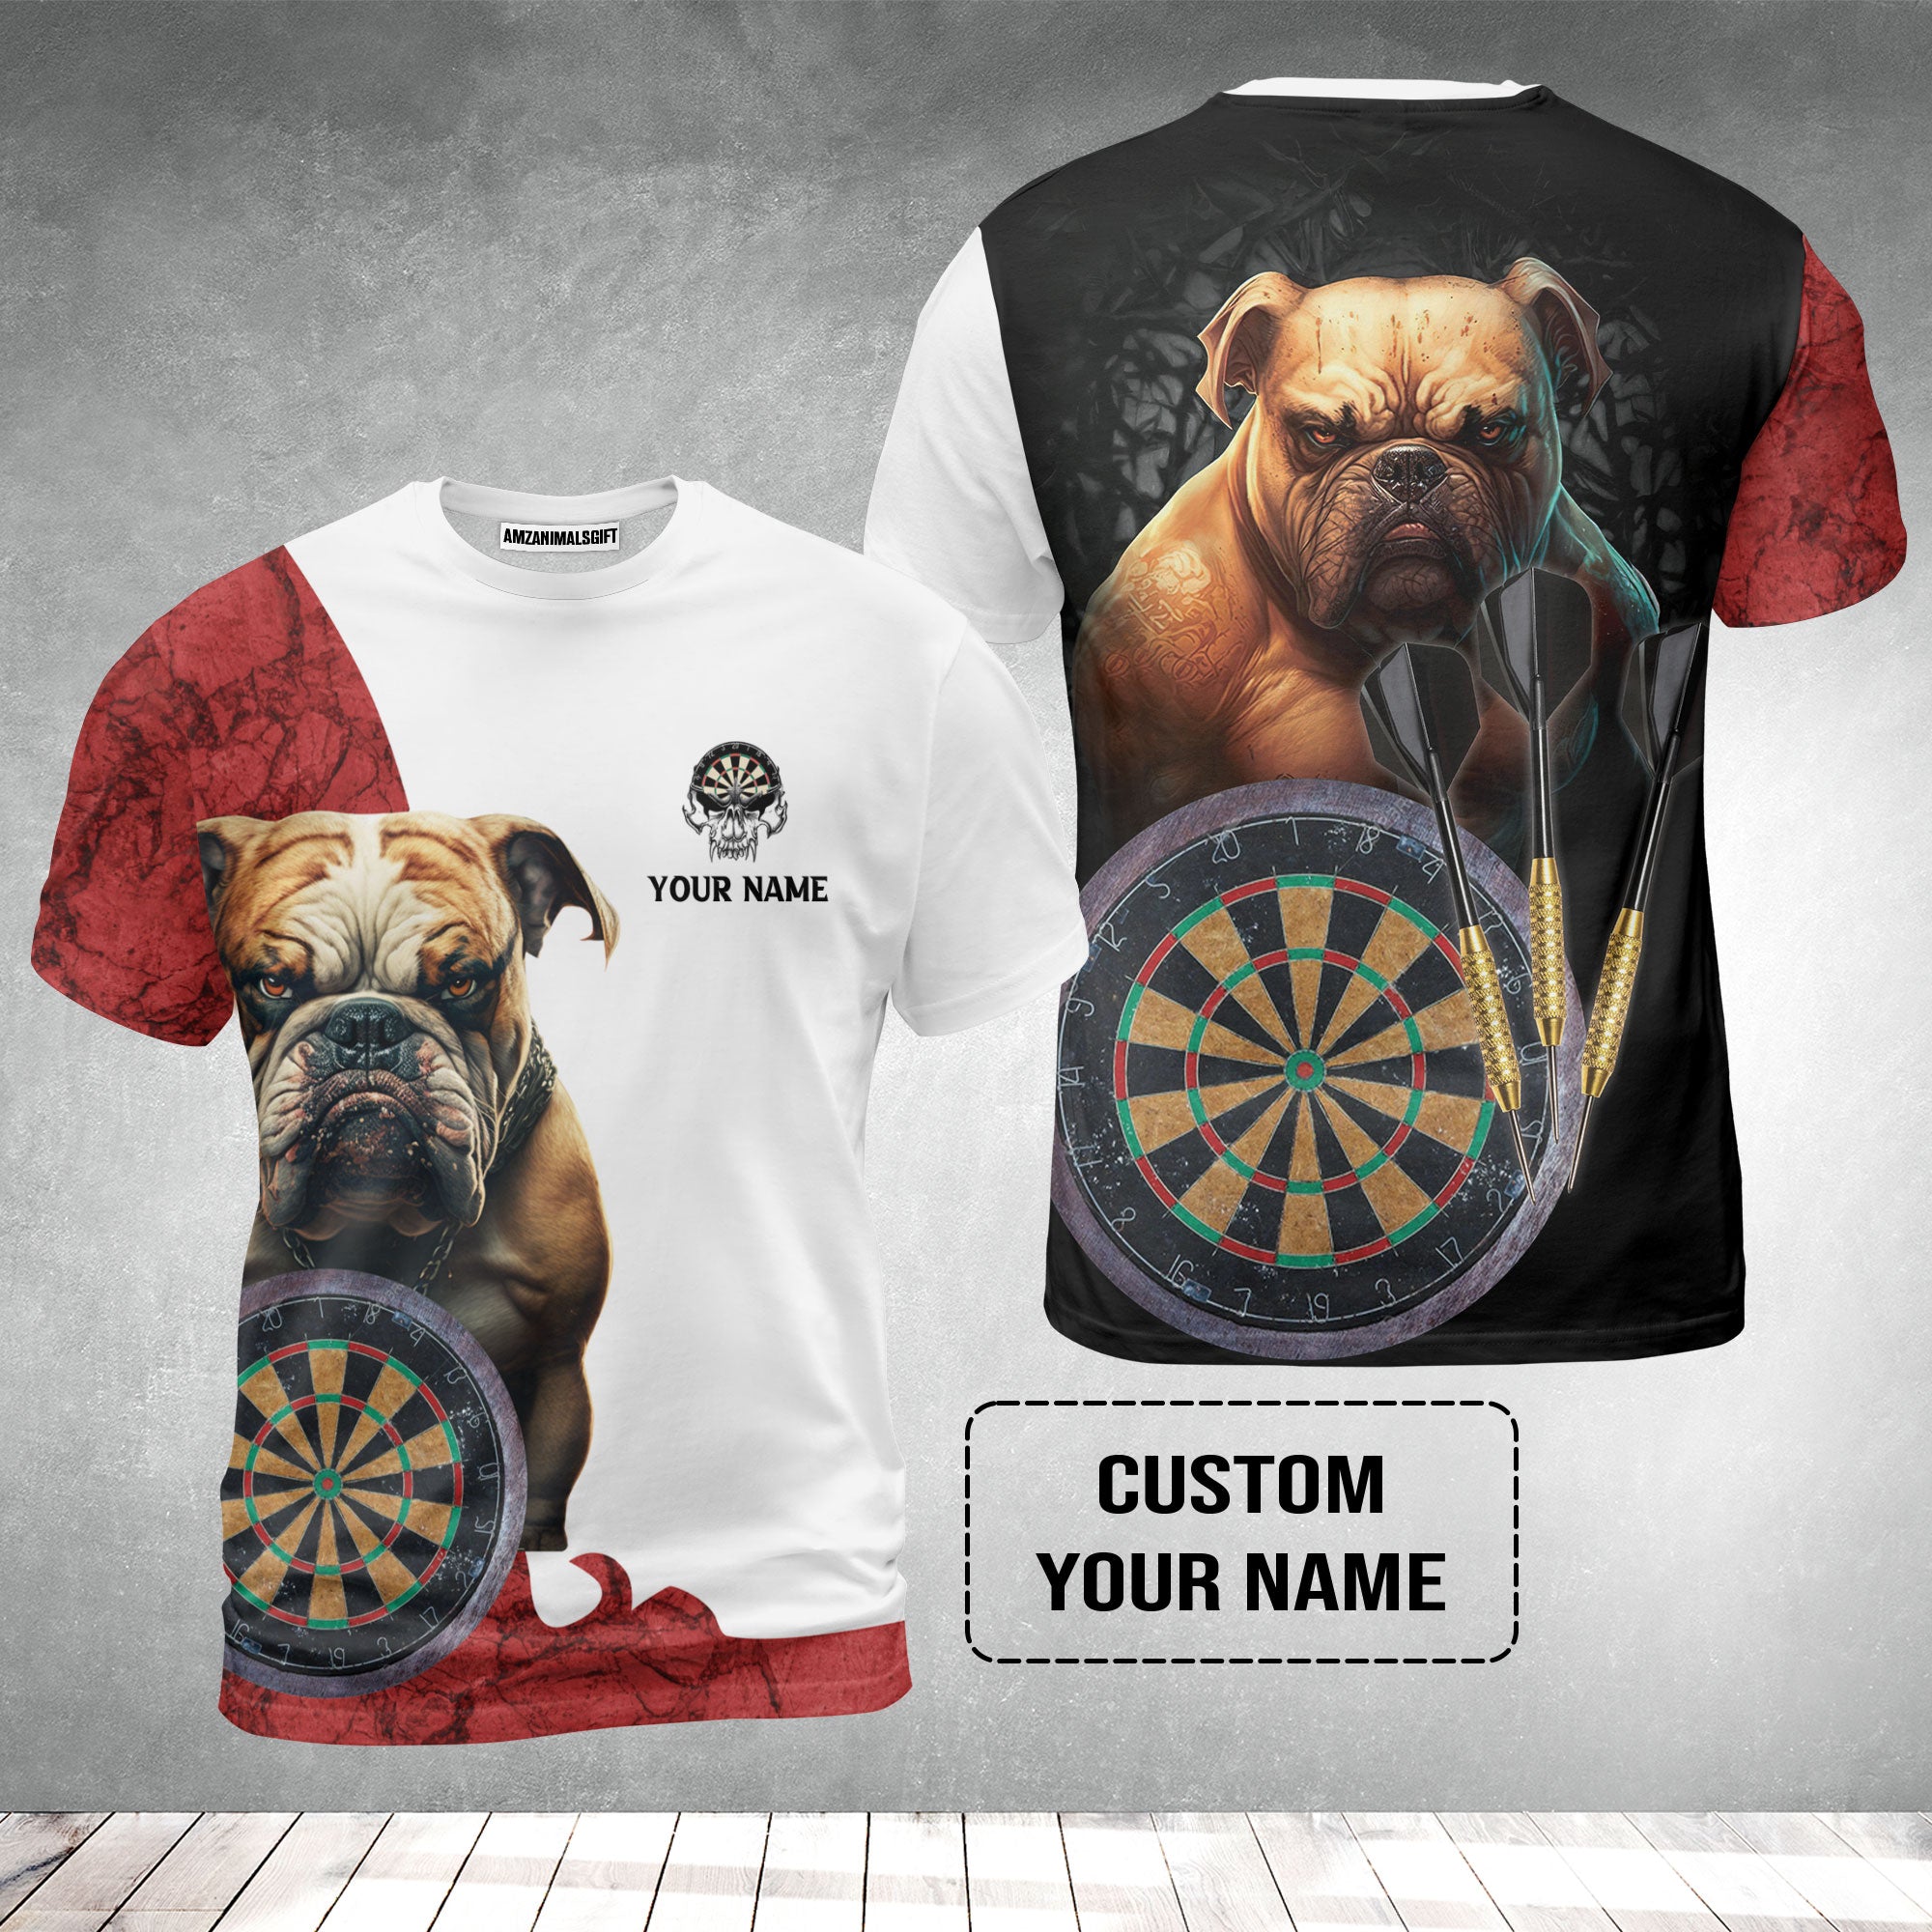 Bulldog And Darts Custom Name T-Shirt, Bullseye Dartboard Personalized T-Shirt - Gift For Darts Lovers, Friends, Team, Dog Lovers